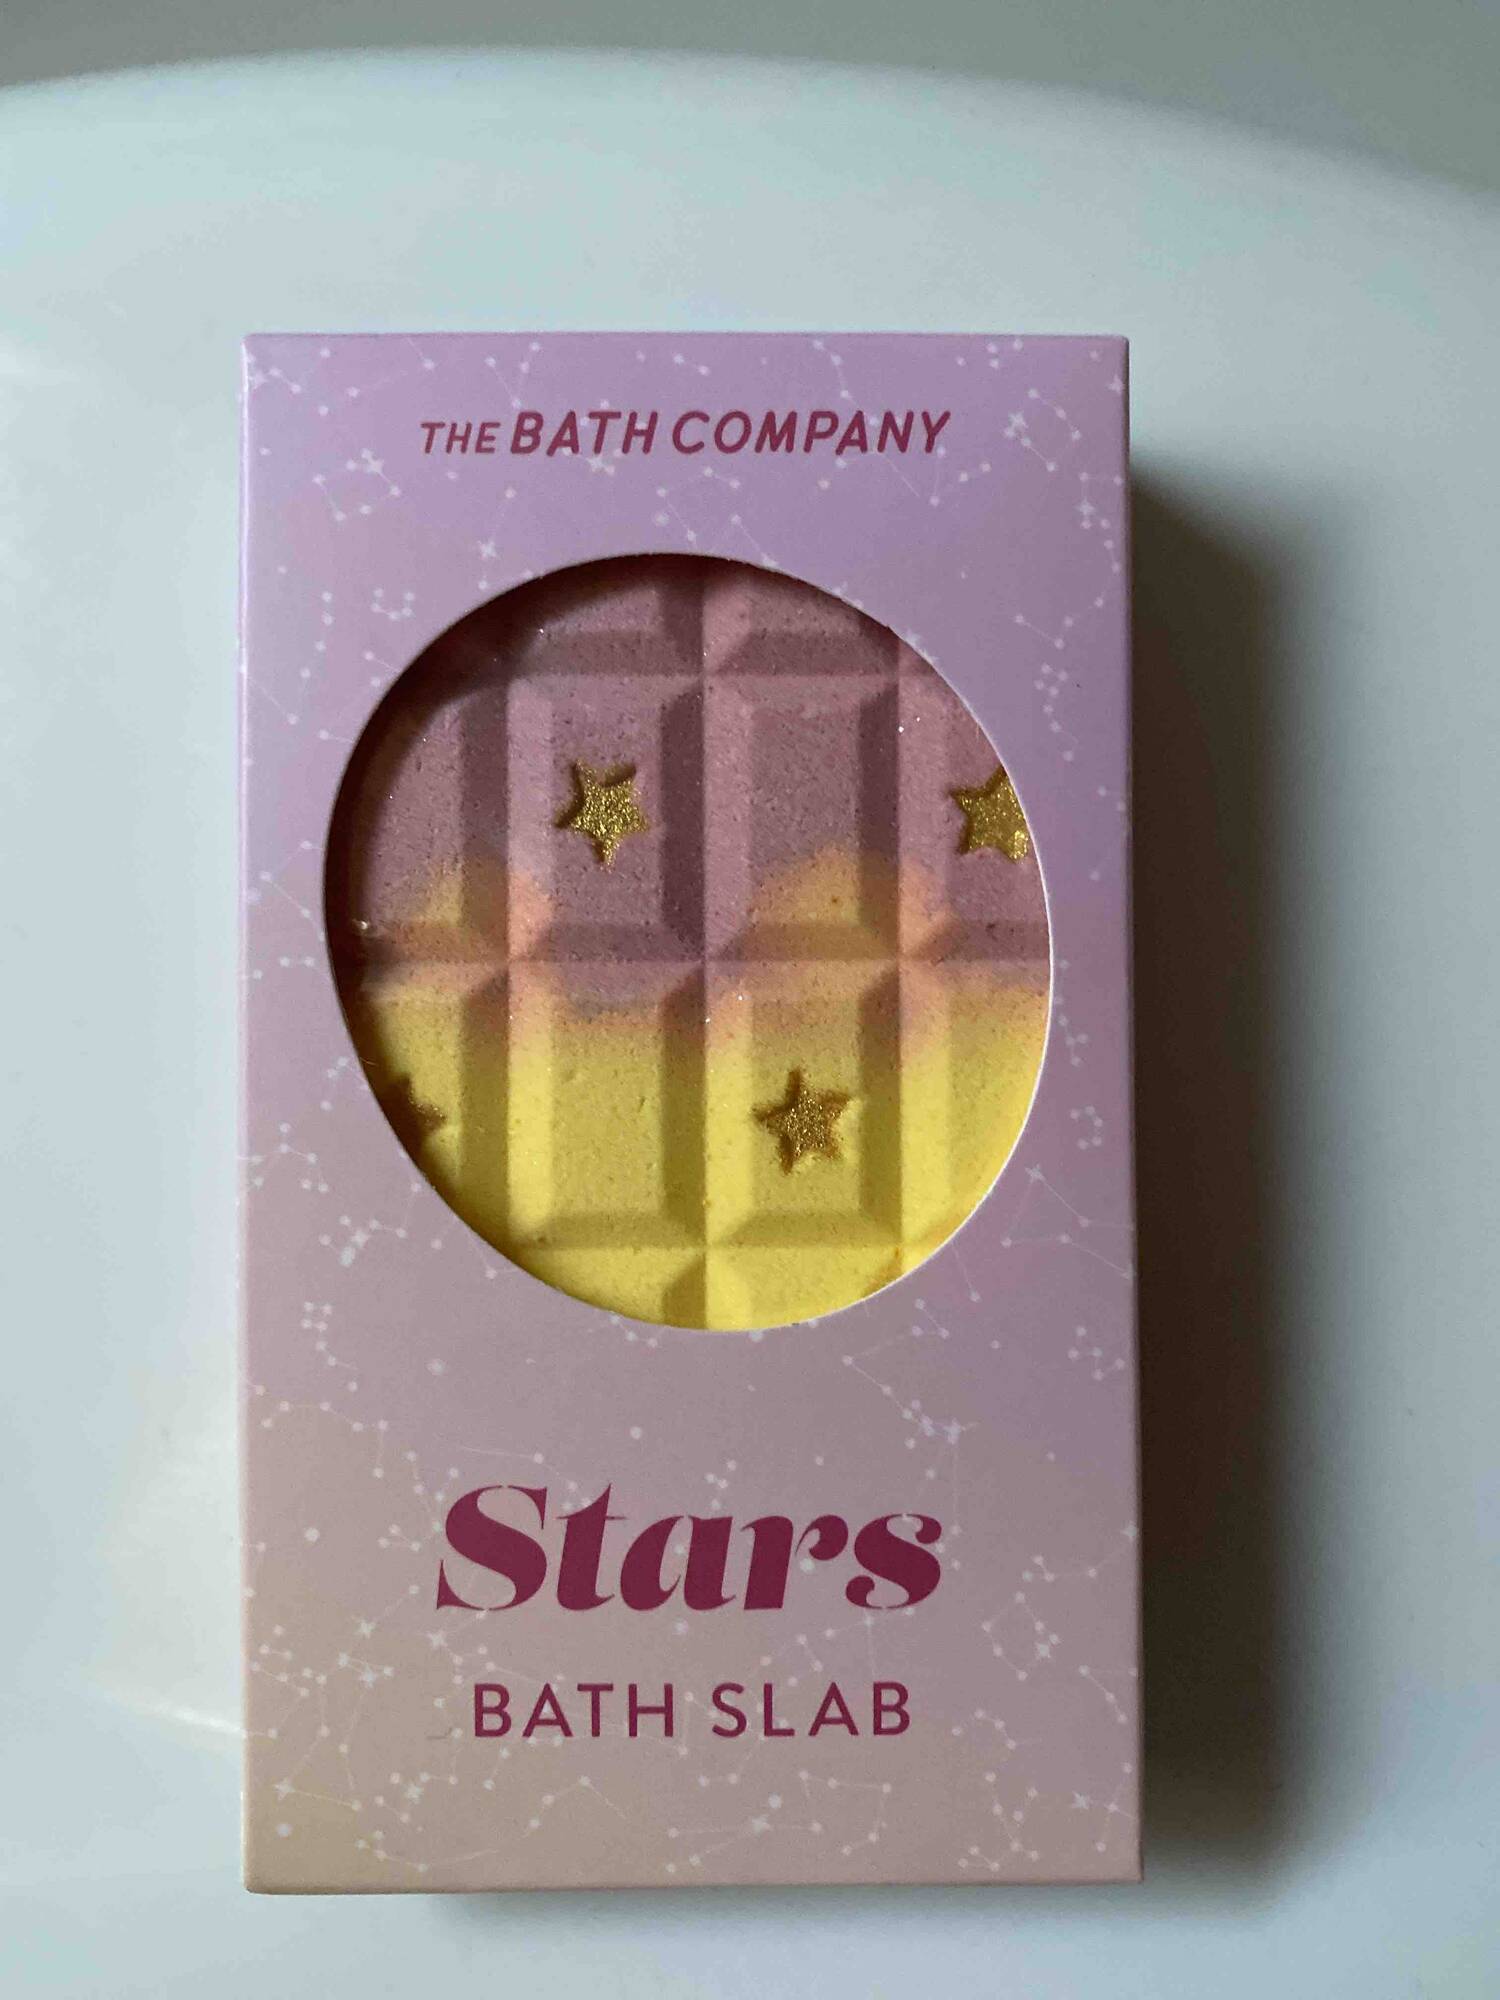 THE BATH COMPANY - Stars - Bath slab